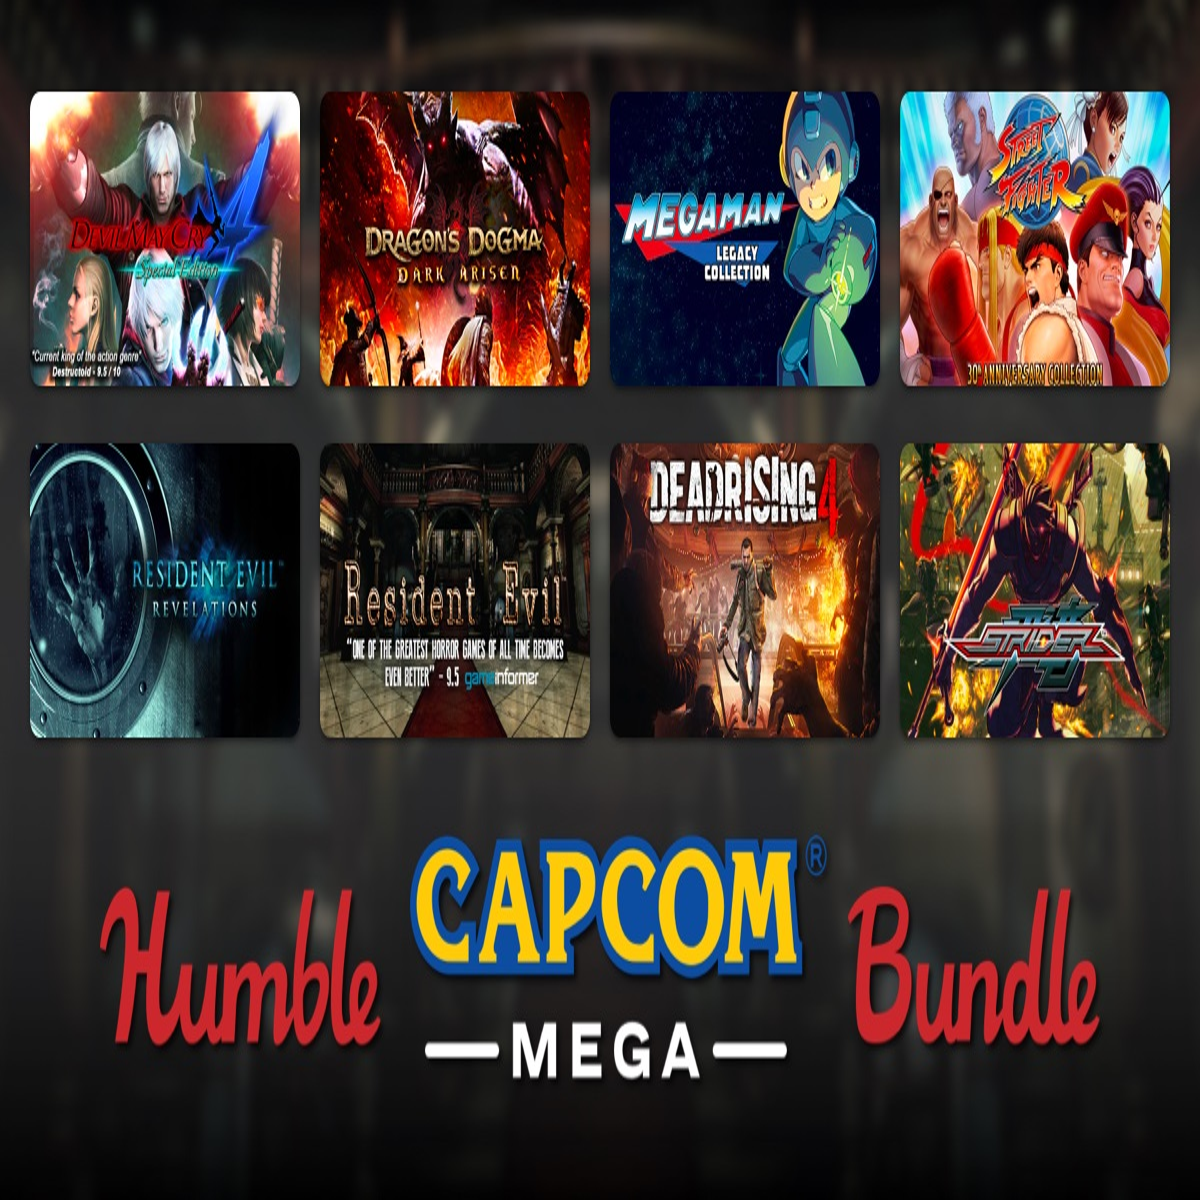 Humble Capcom Mega Bundle includes Resident Evil, Mega Man